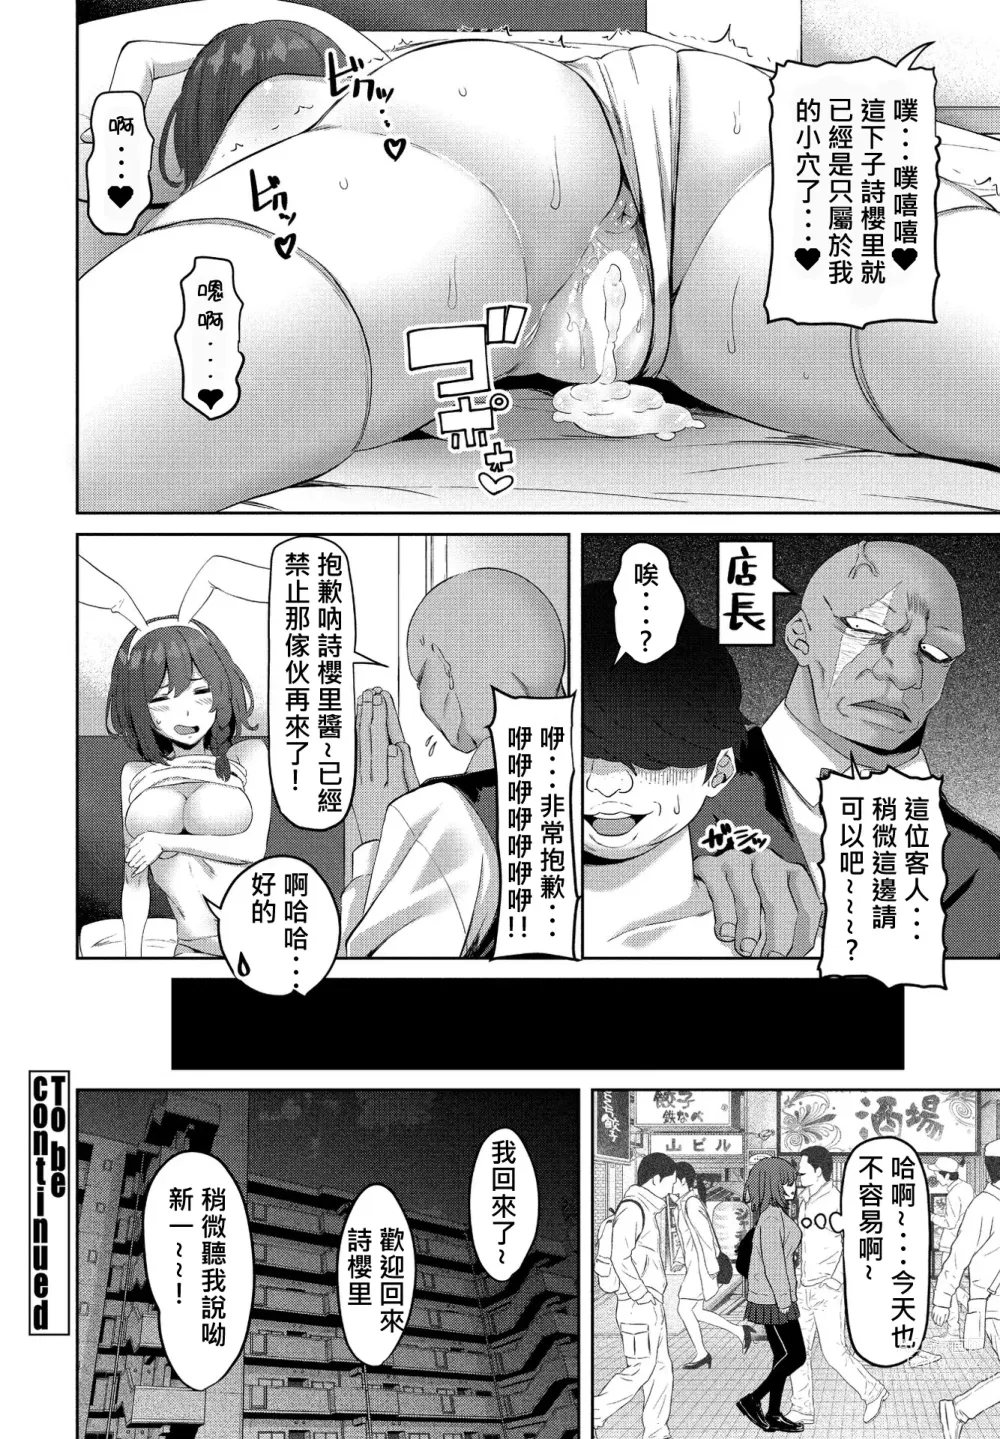 Page 21 of manga Chotto Kiite yo! Ch. 3